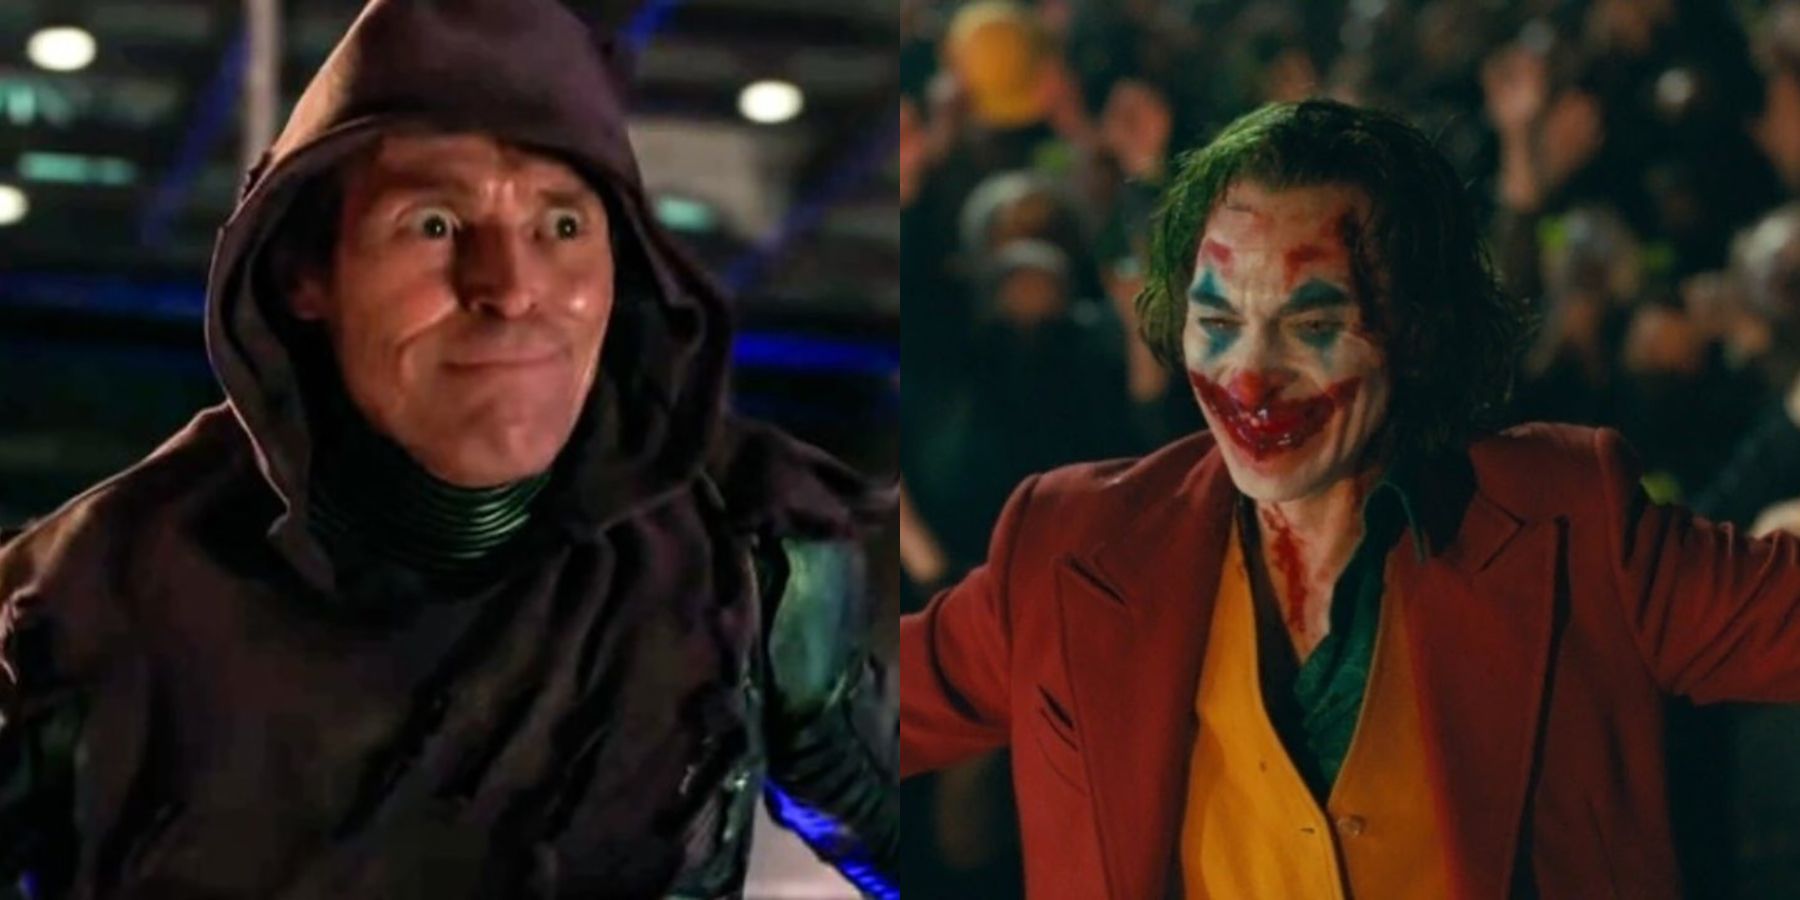 Willem Dafoe Wants To Appear In A Potential Joker Sequel